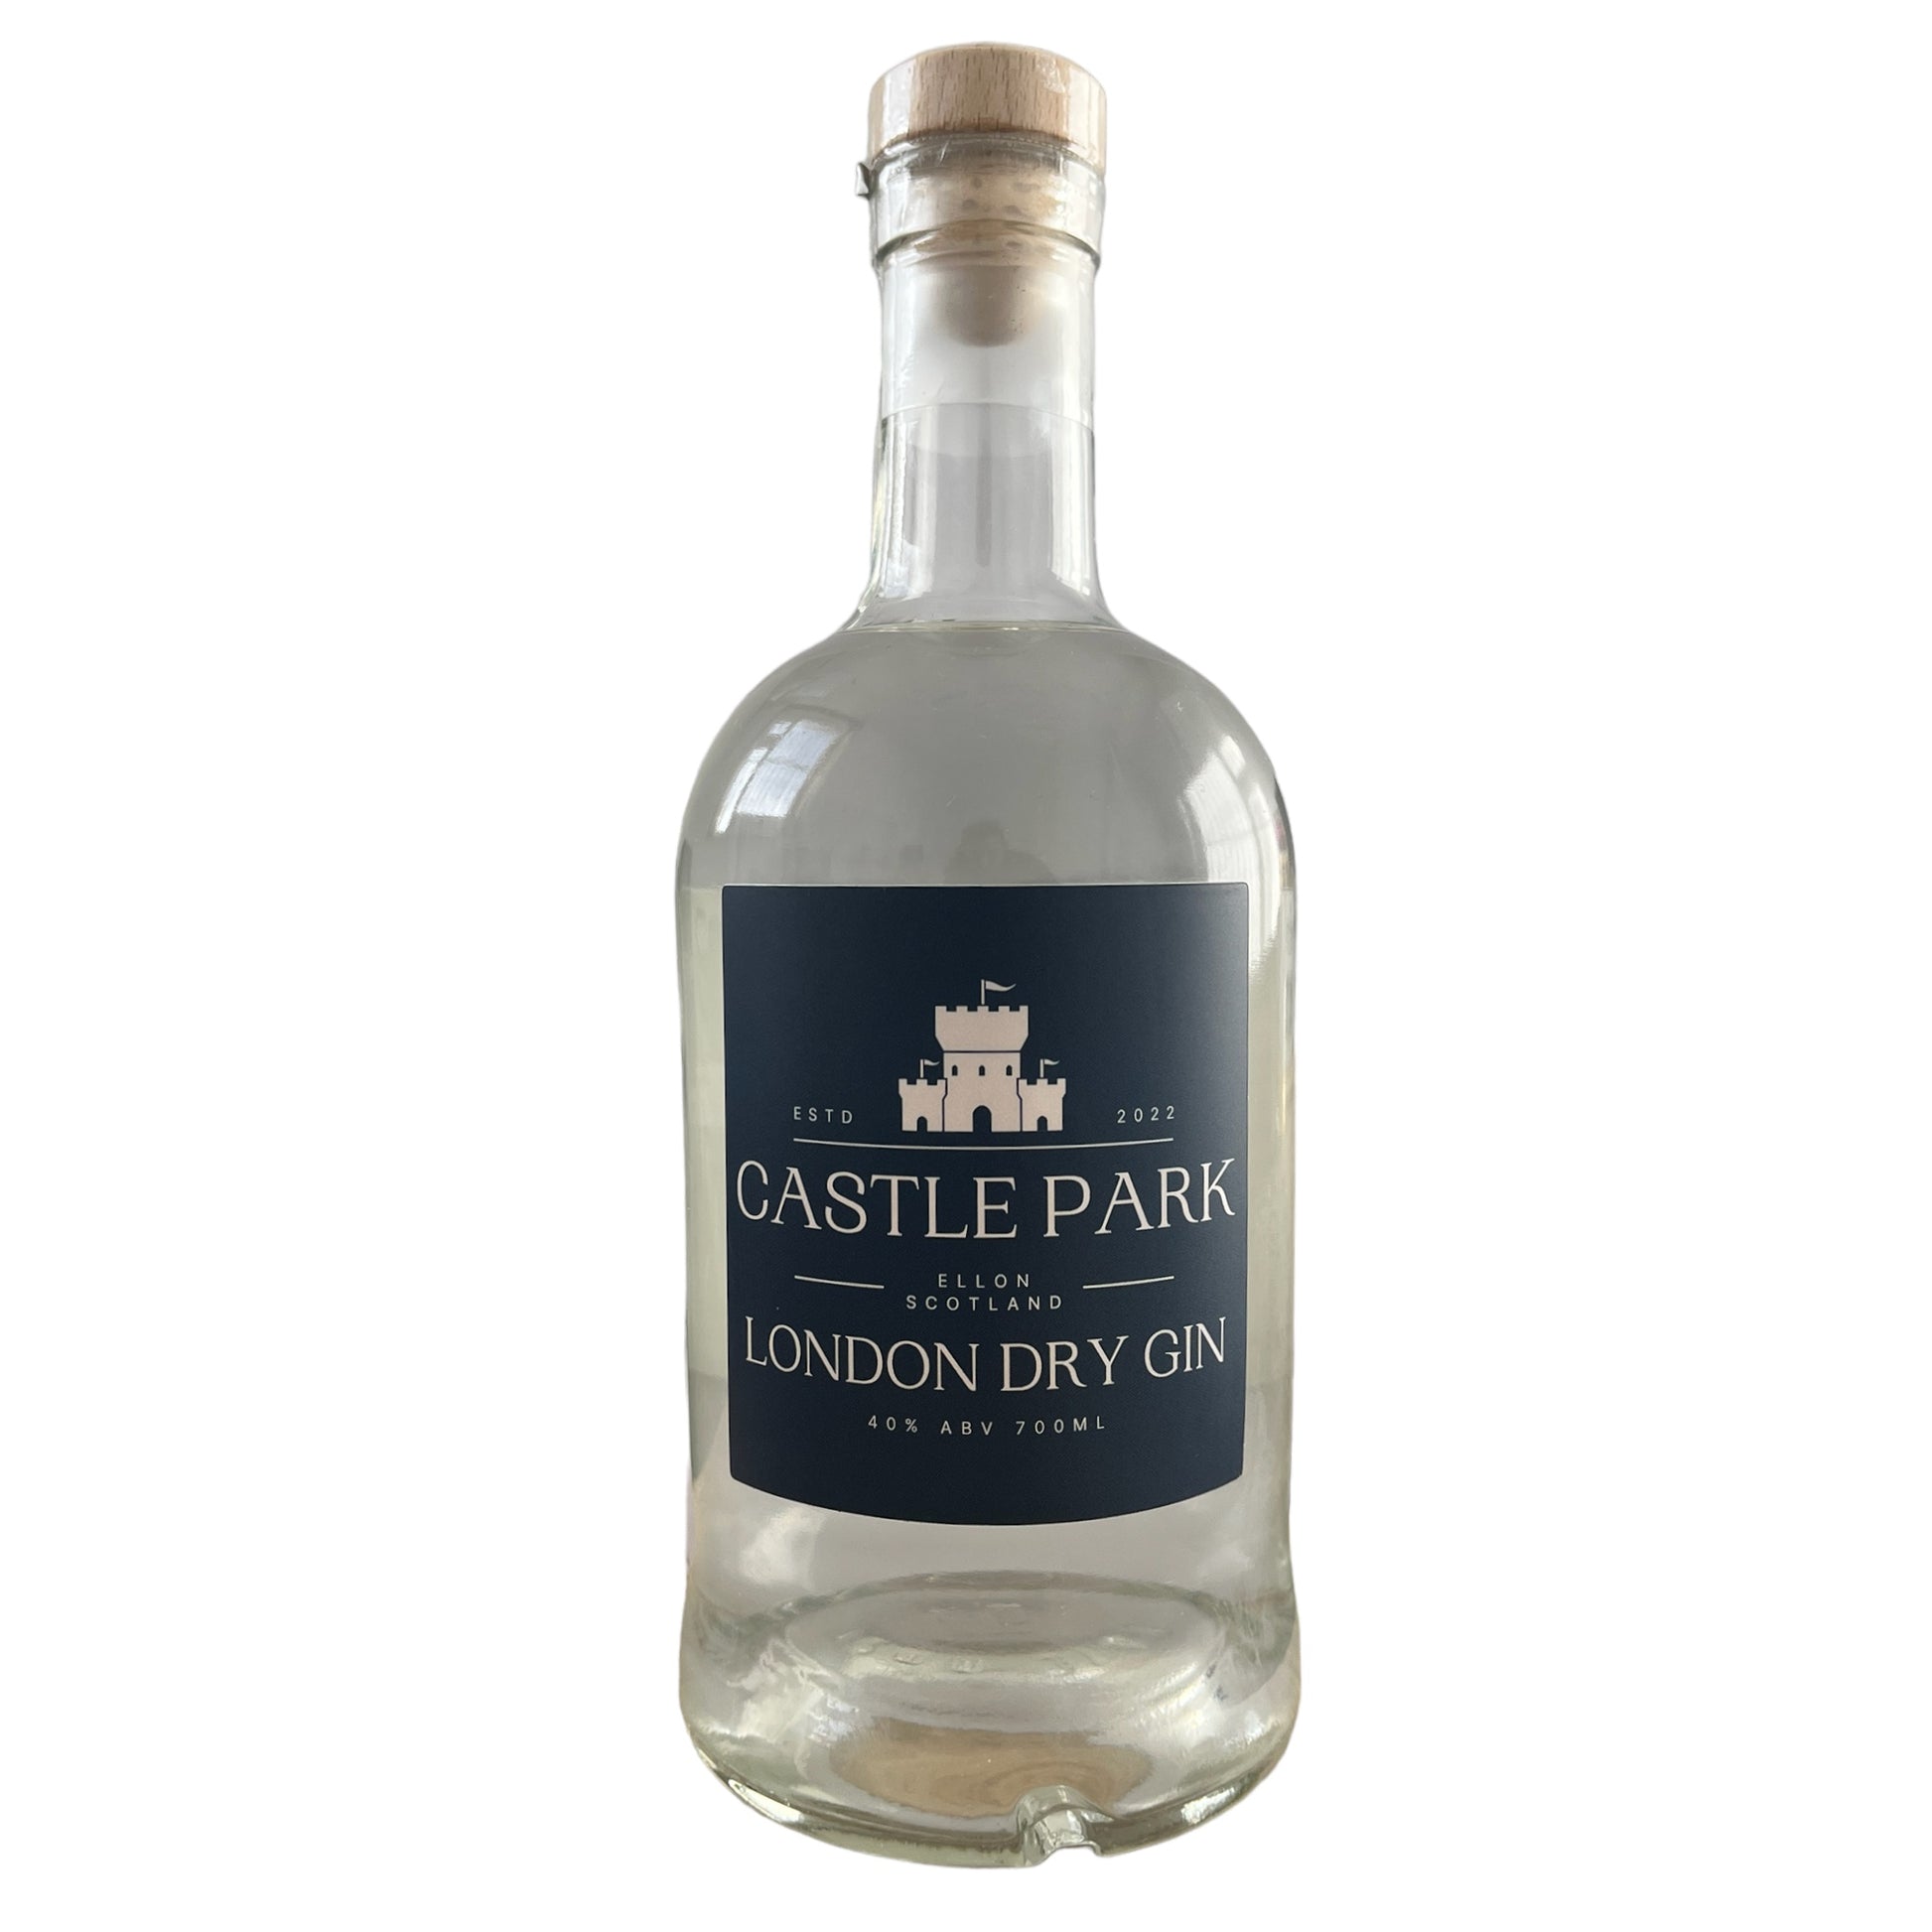 Castle Park London Dry Gin 40% 700ml on white background